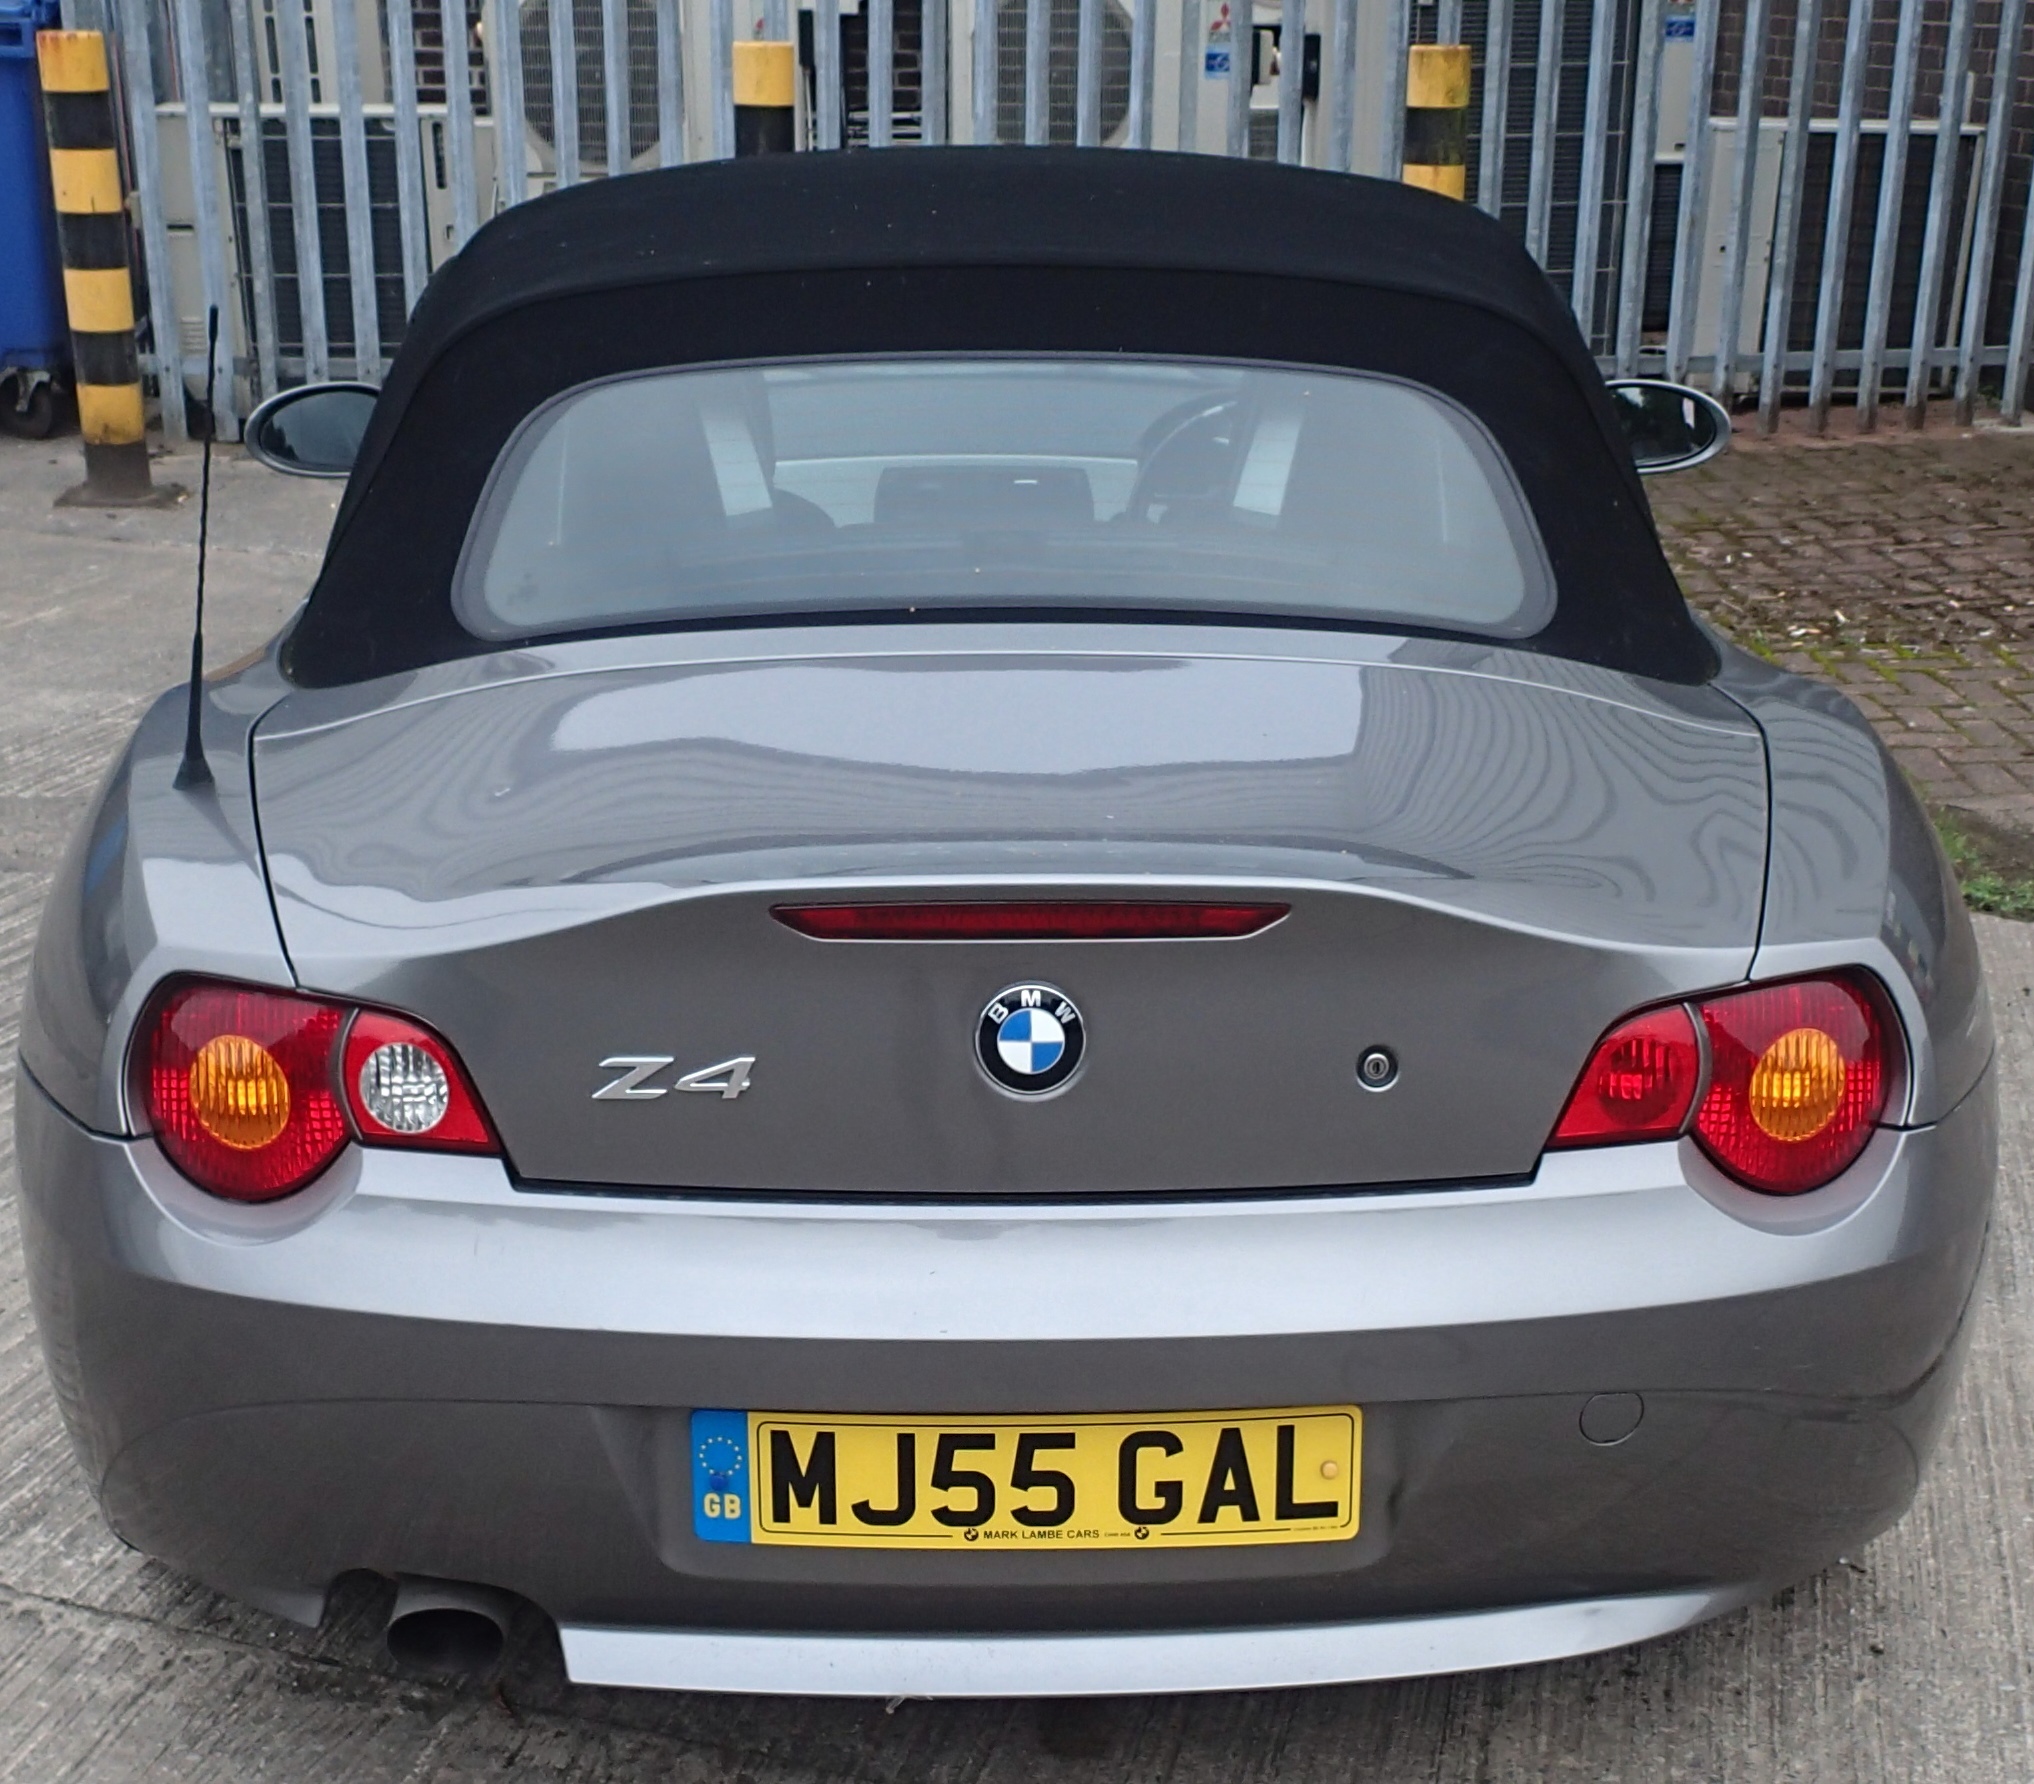 2005 BMW Z4 2.0 petrol convertible in grey, black leather interior. Registration MJ55 GAL. MOT until - Image 2 of 4